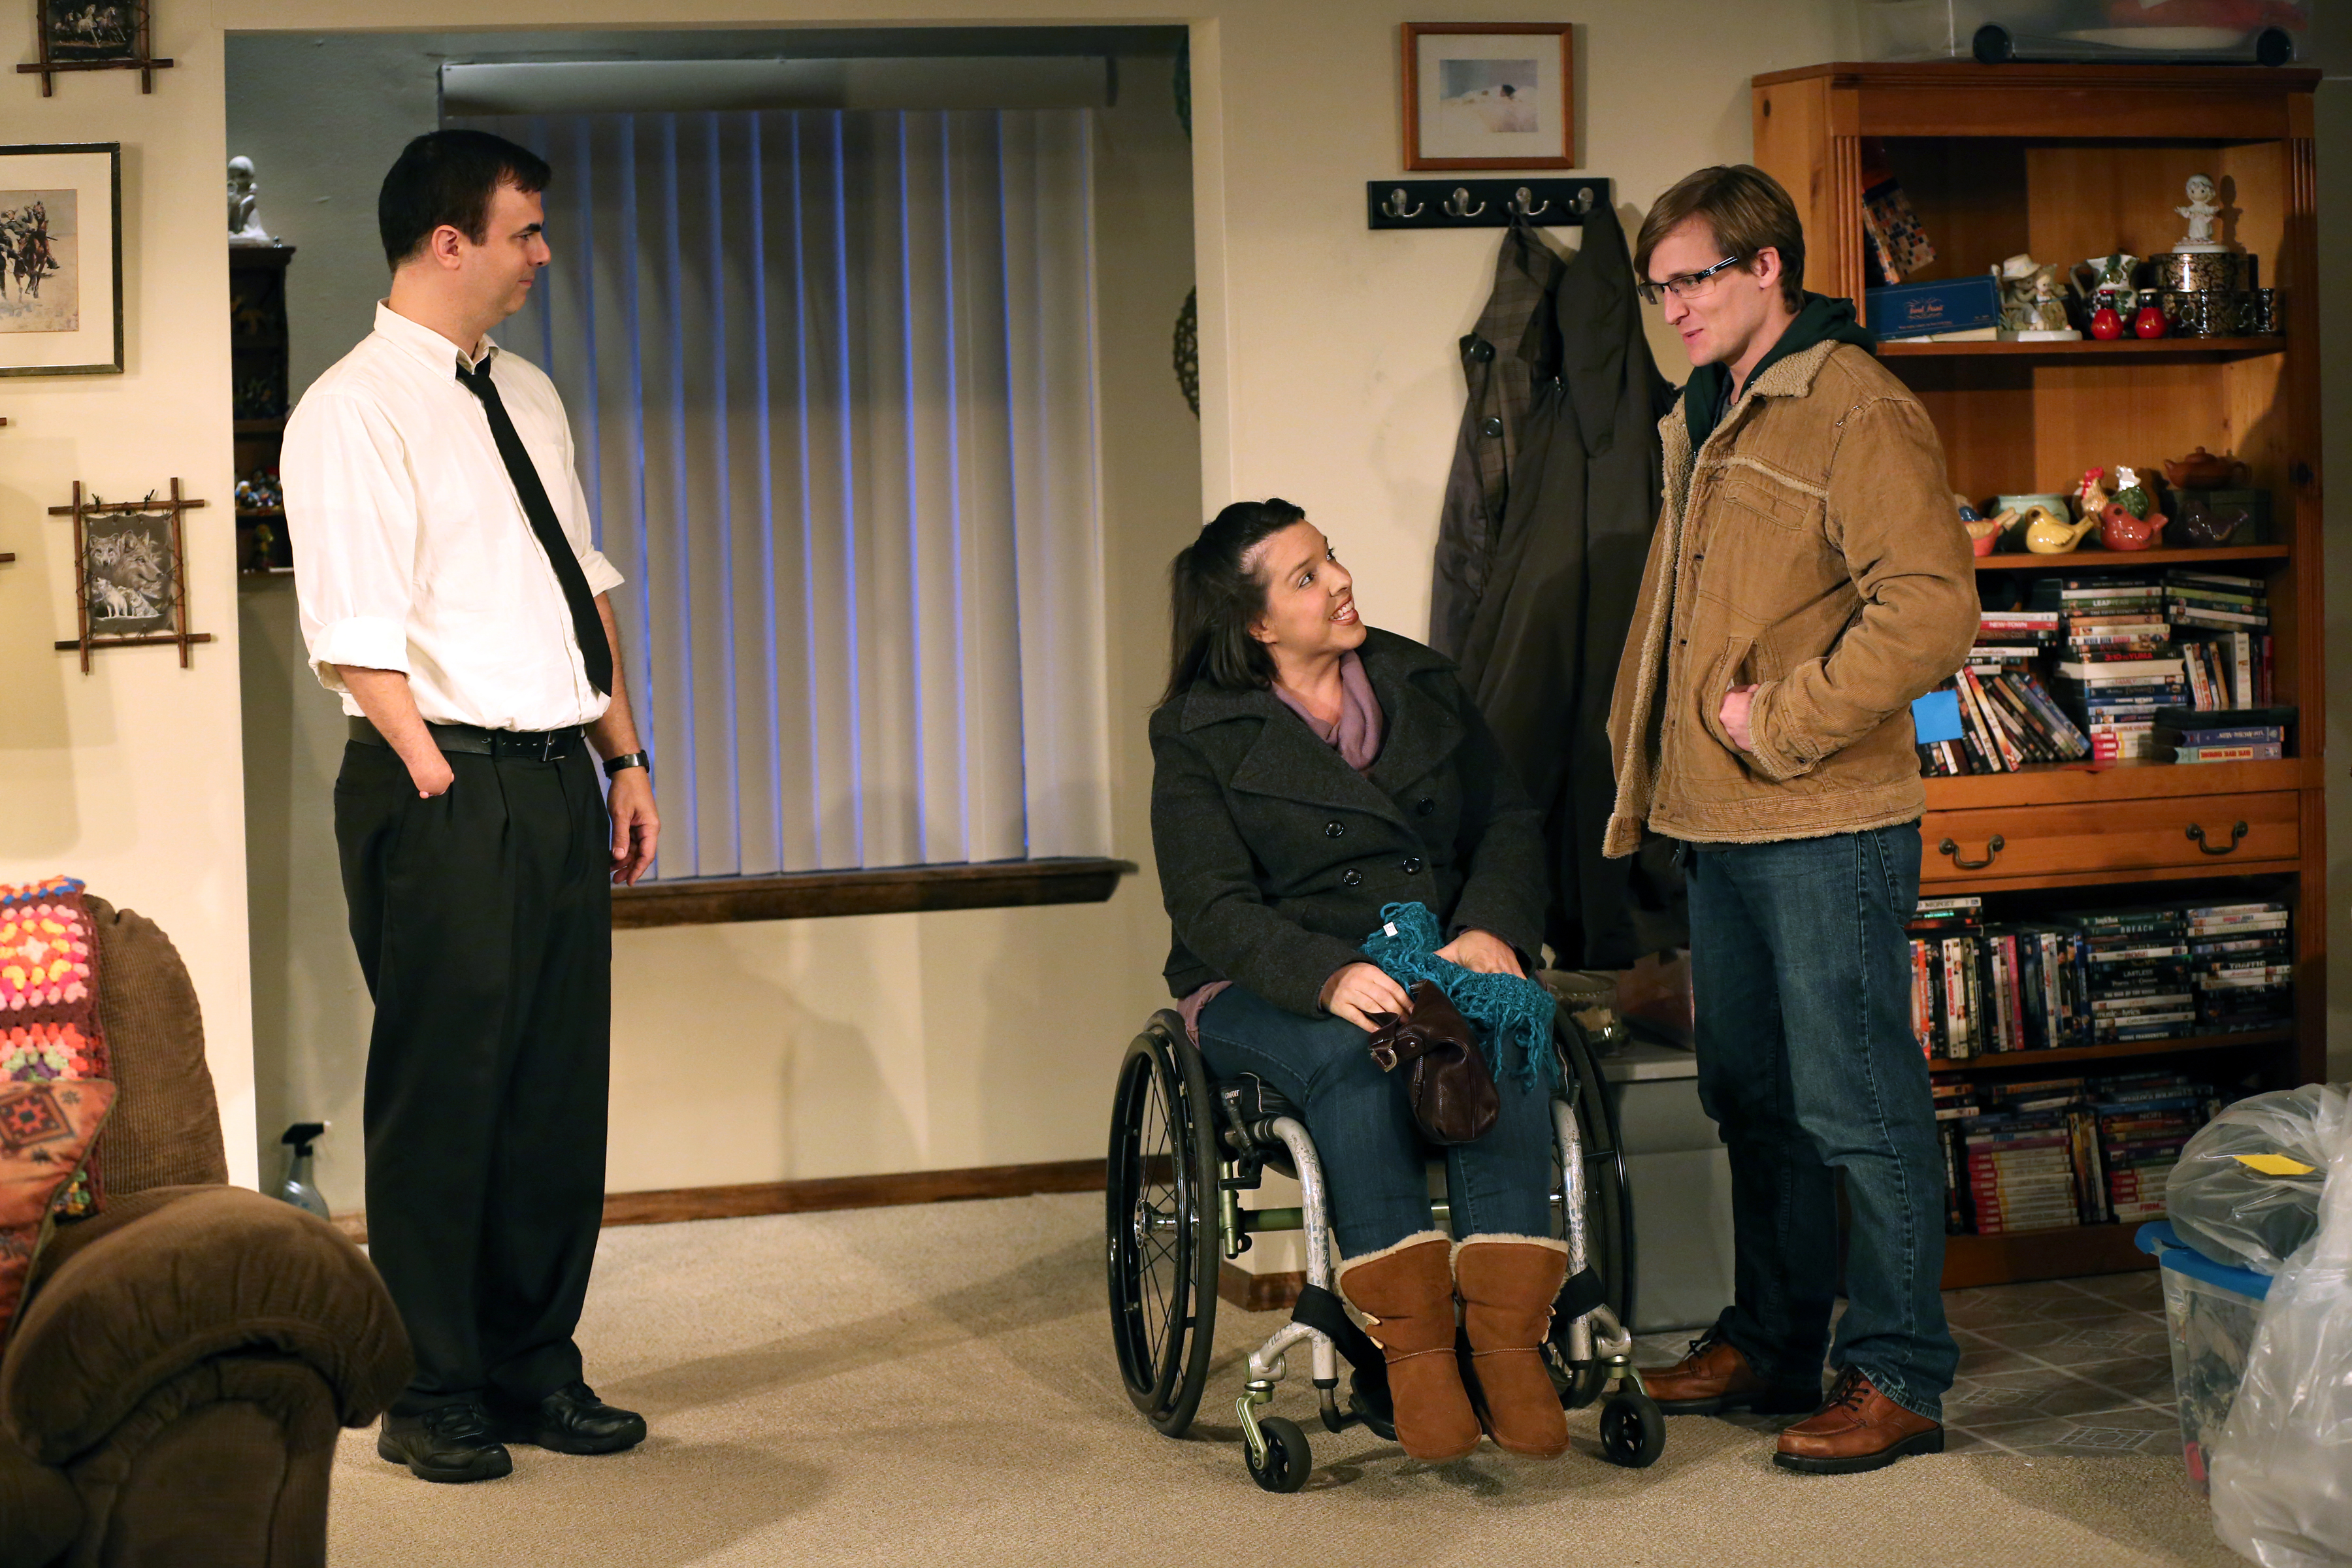 David Harrell, Jamie Petrone, and John McGinty in "The Healing." (Photo by Carol Rosegg)